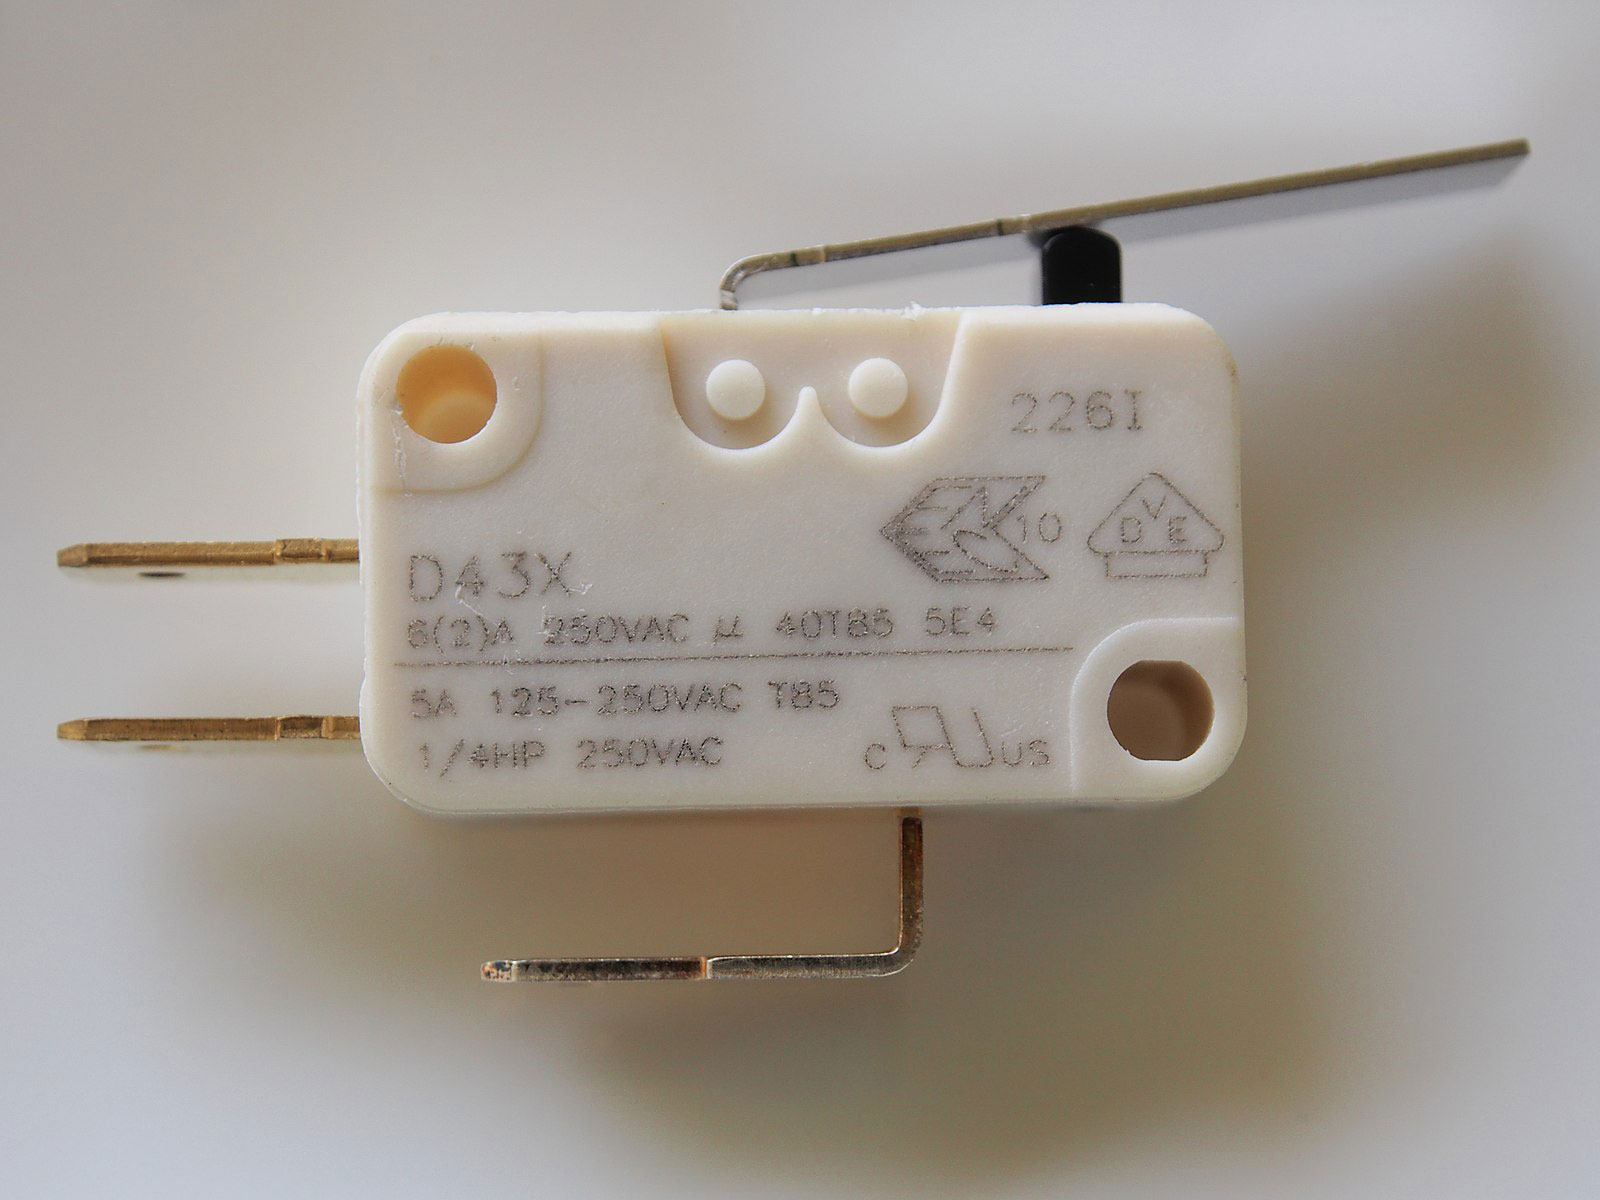 A Cherry D43X micro switch